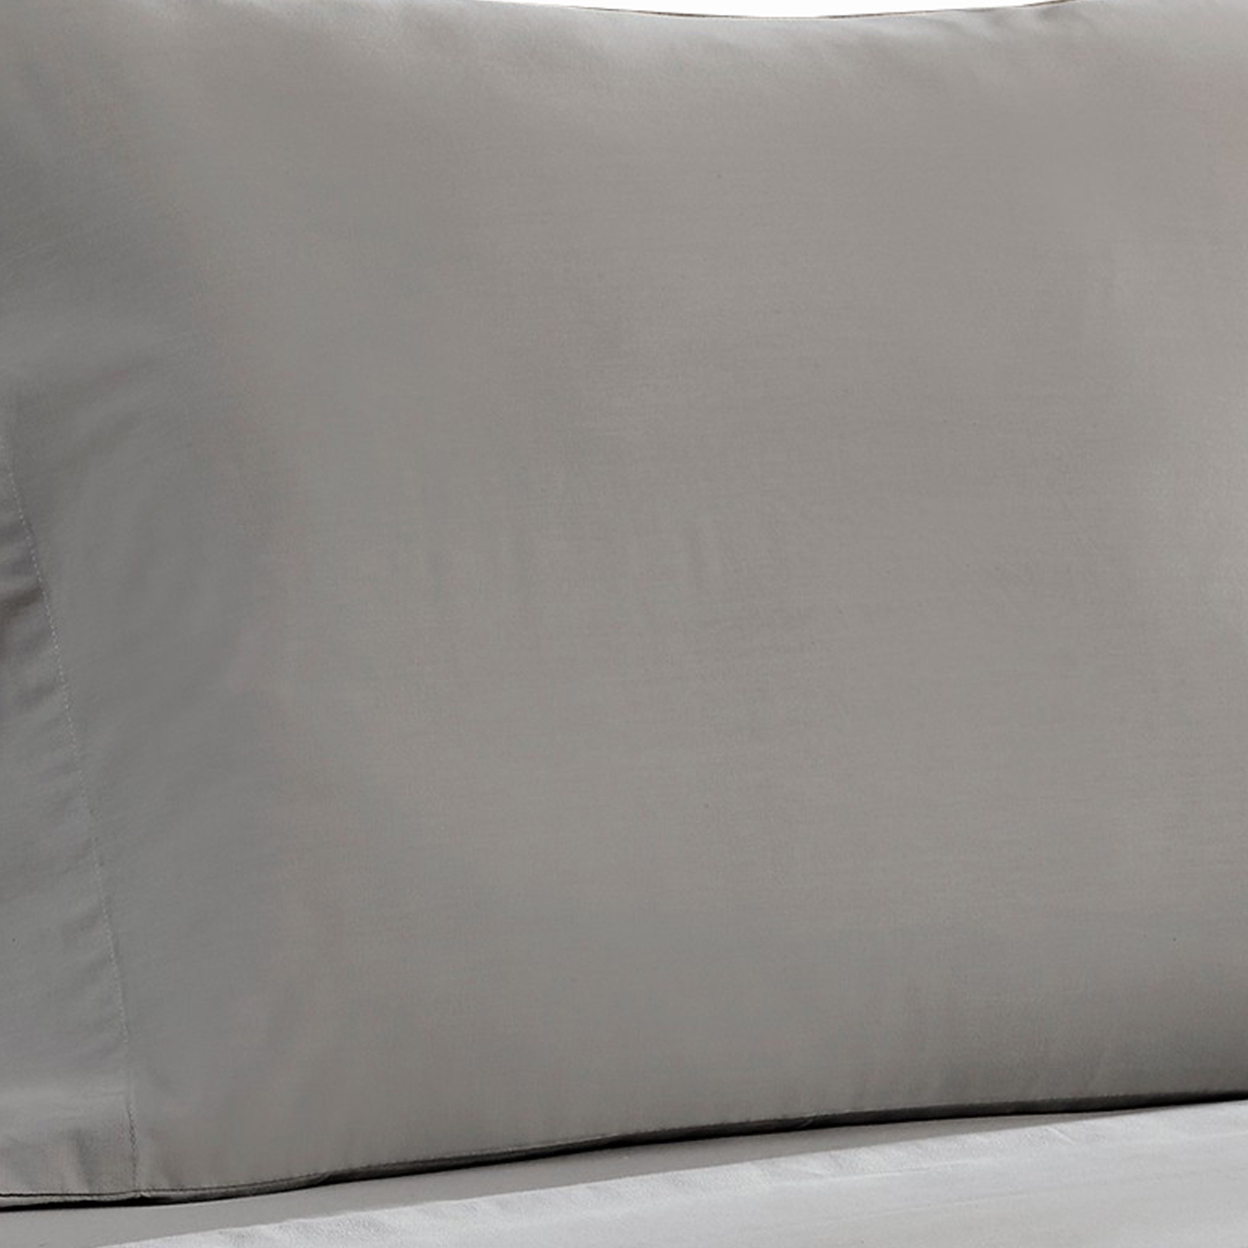 Ivy 4 Piece King Size Cotton Ultra Soft Bed Sheet Set, Prewashed, Dark Gray- Saltoro Sherpi